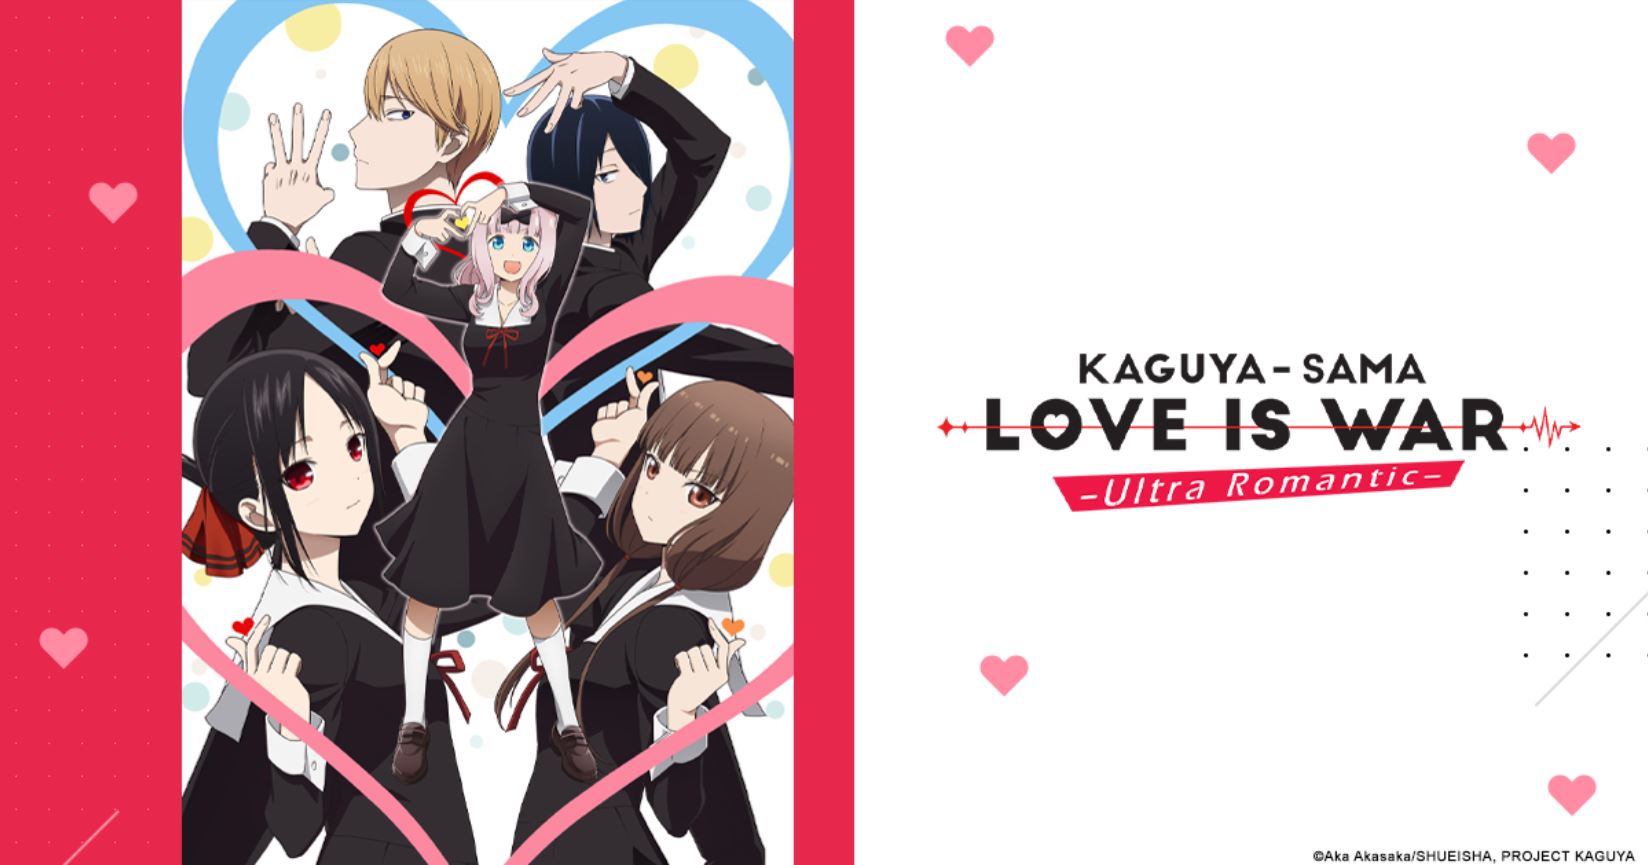 Kaguya-sama: Love Is War Season 3 -Ultra Romantic- To Premiere In US Theaters